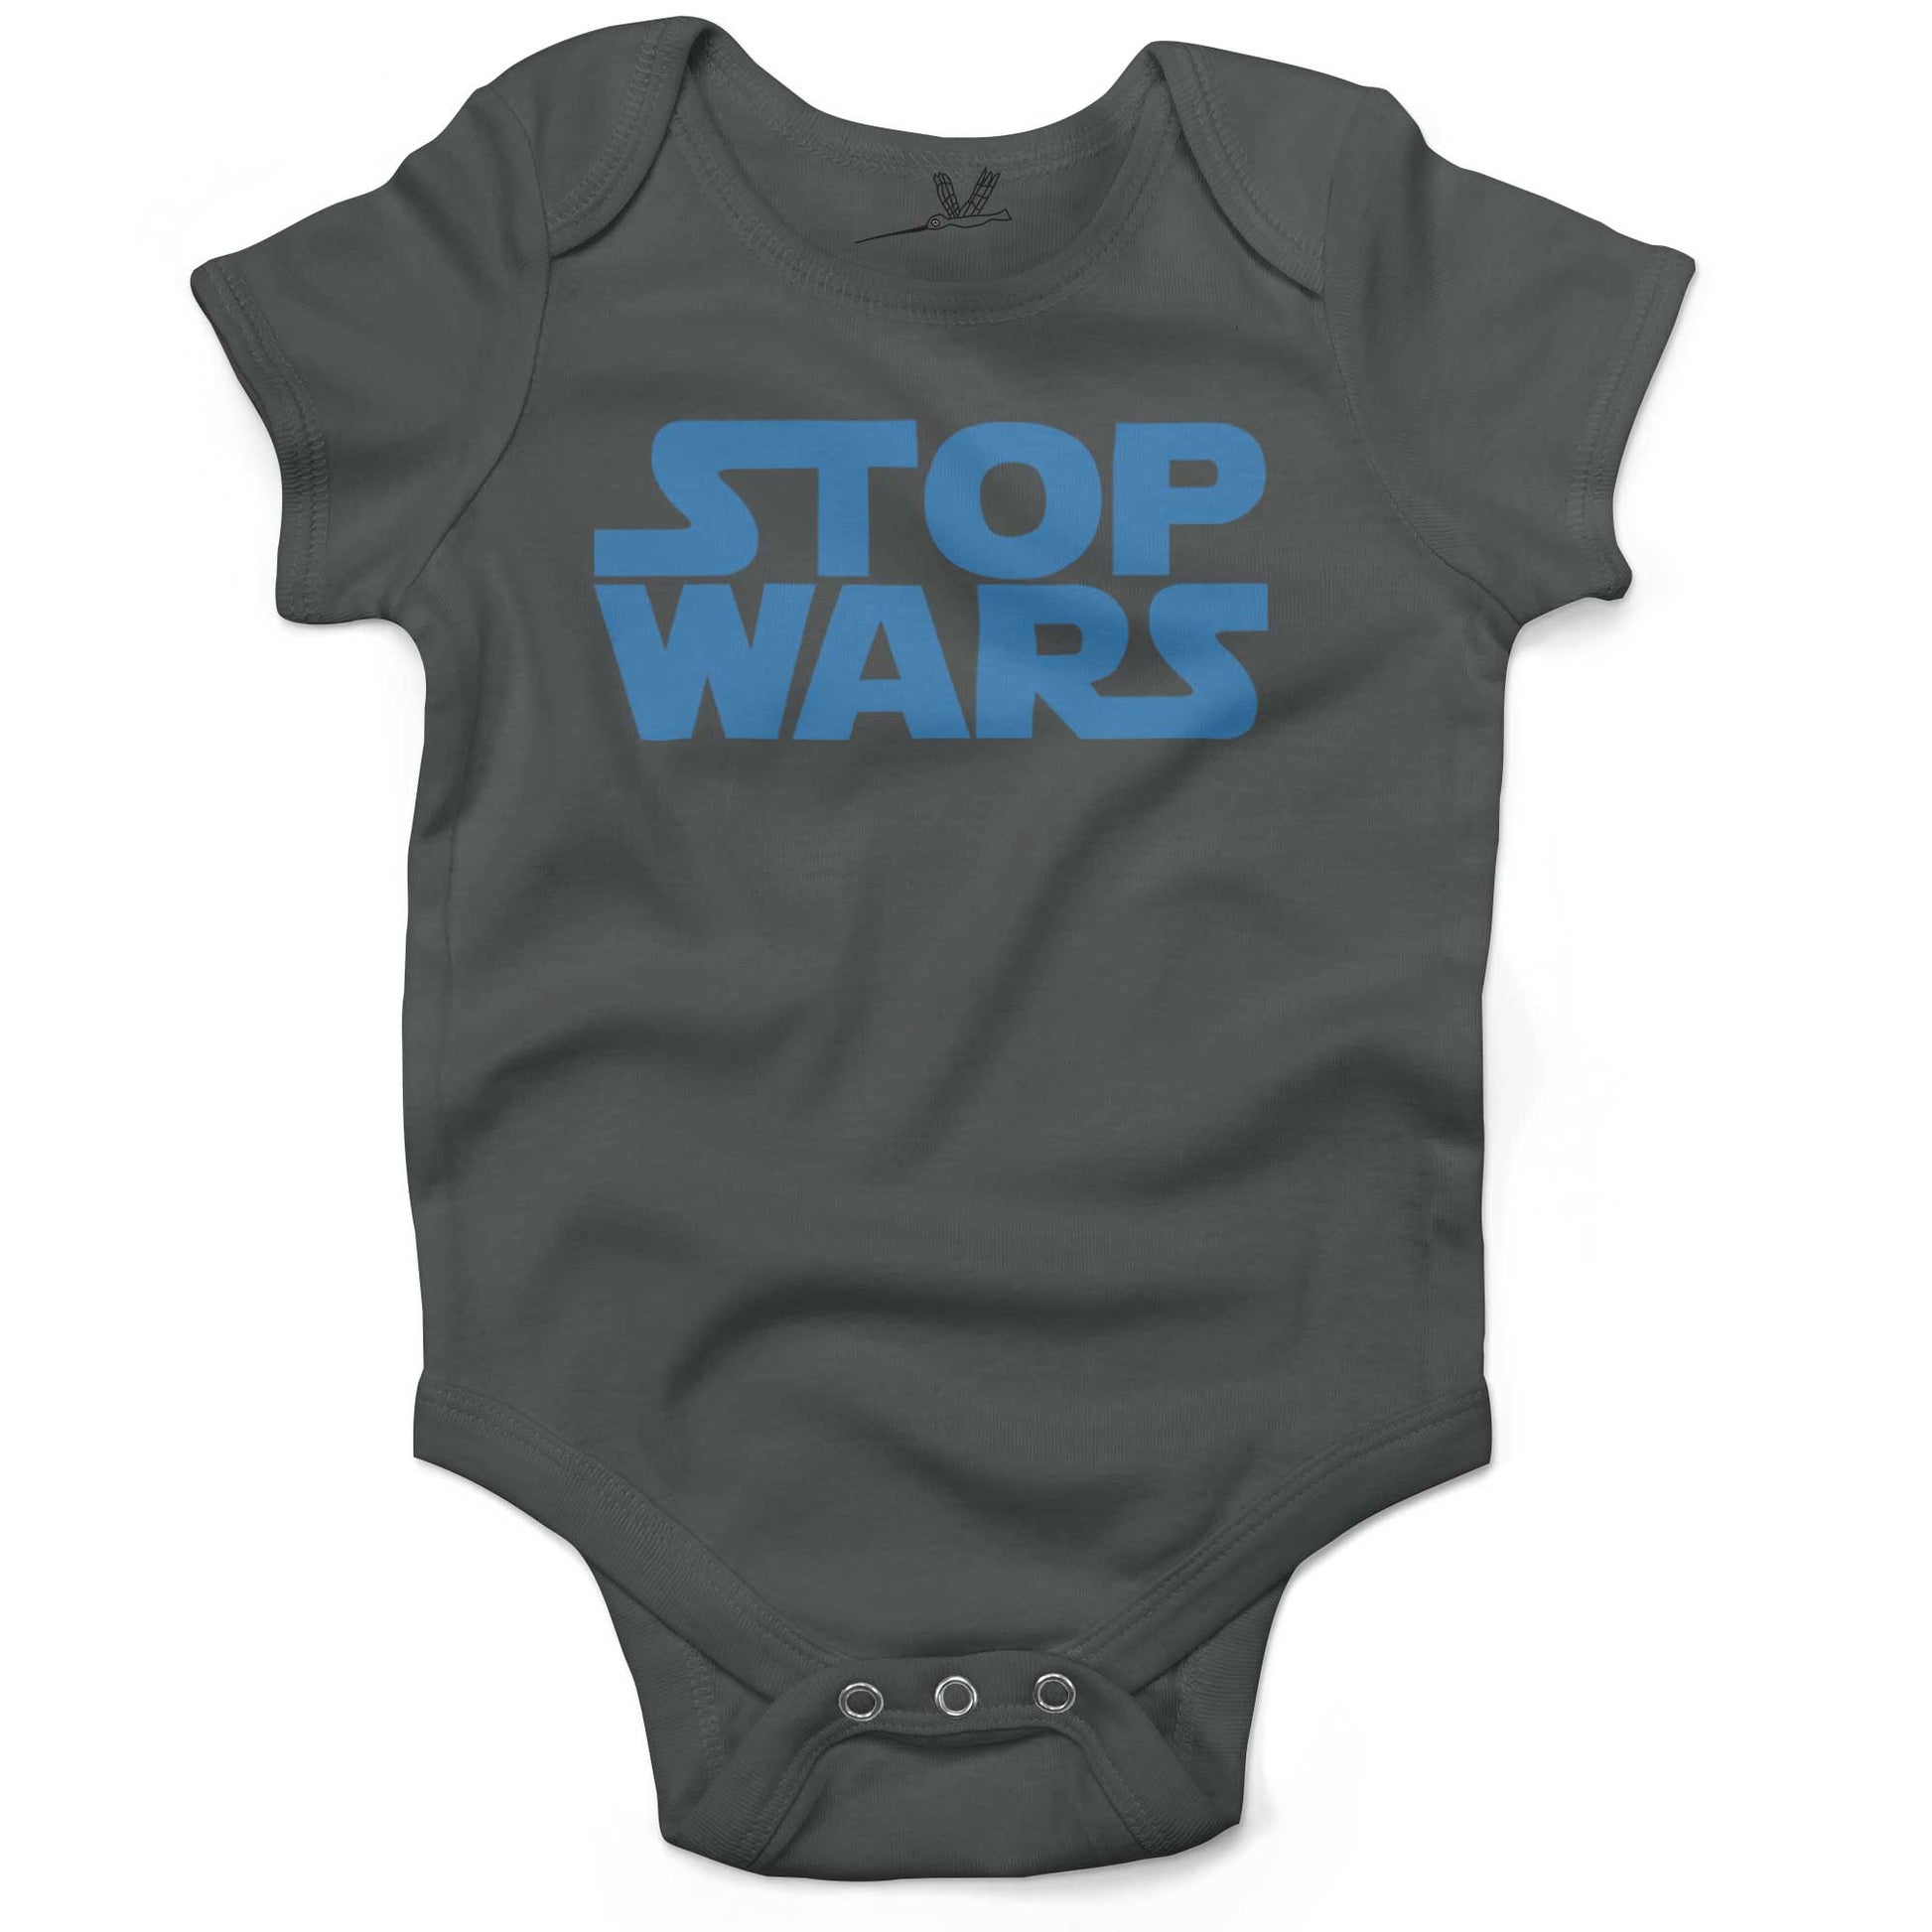 STOP WARS Infant Bodysuit or Raglan Baby Tee-Organic Asphalt-3-6 months